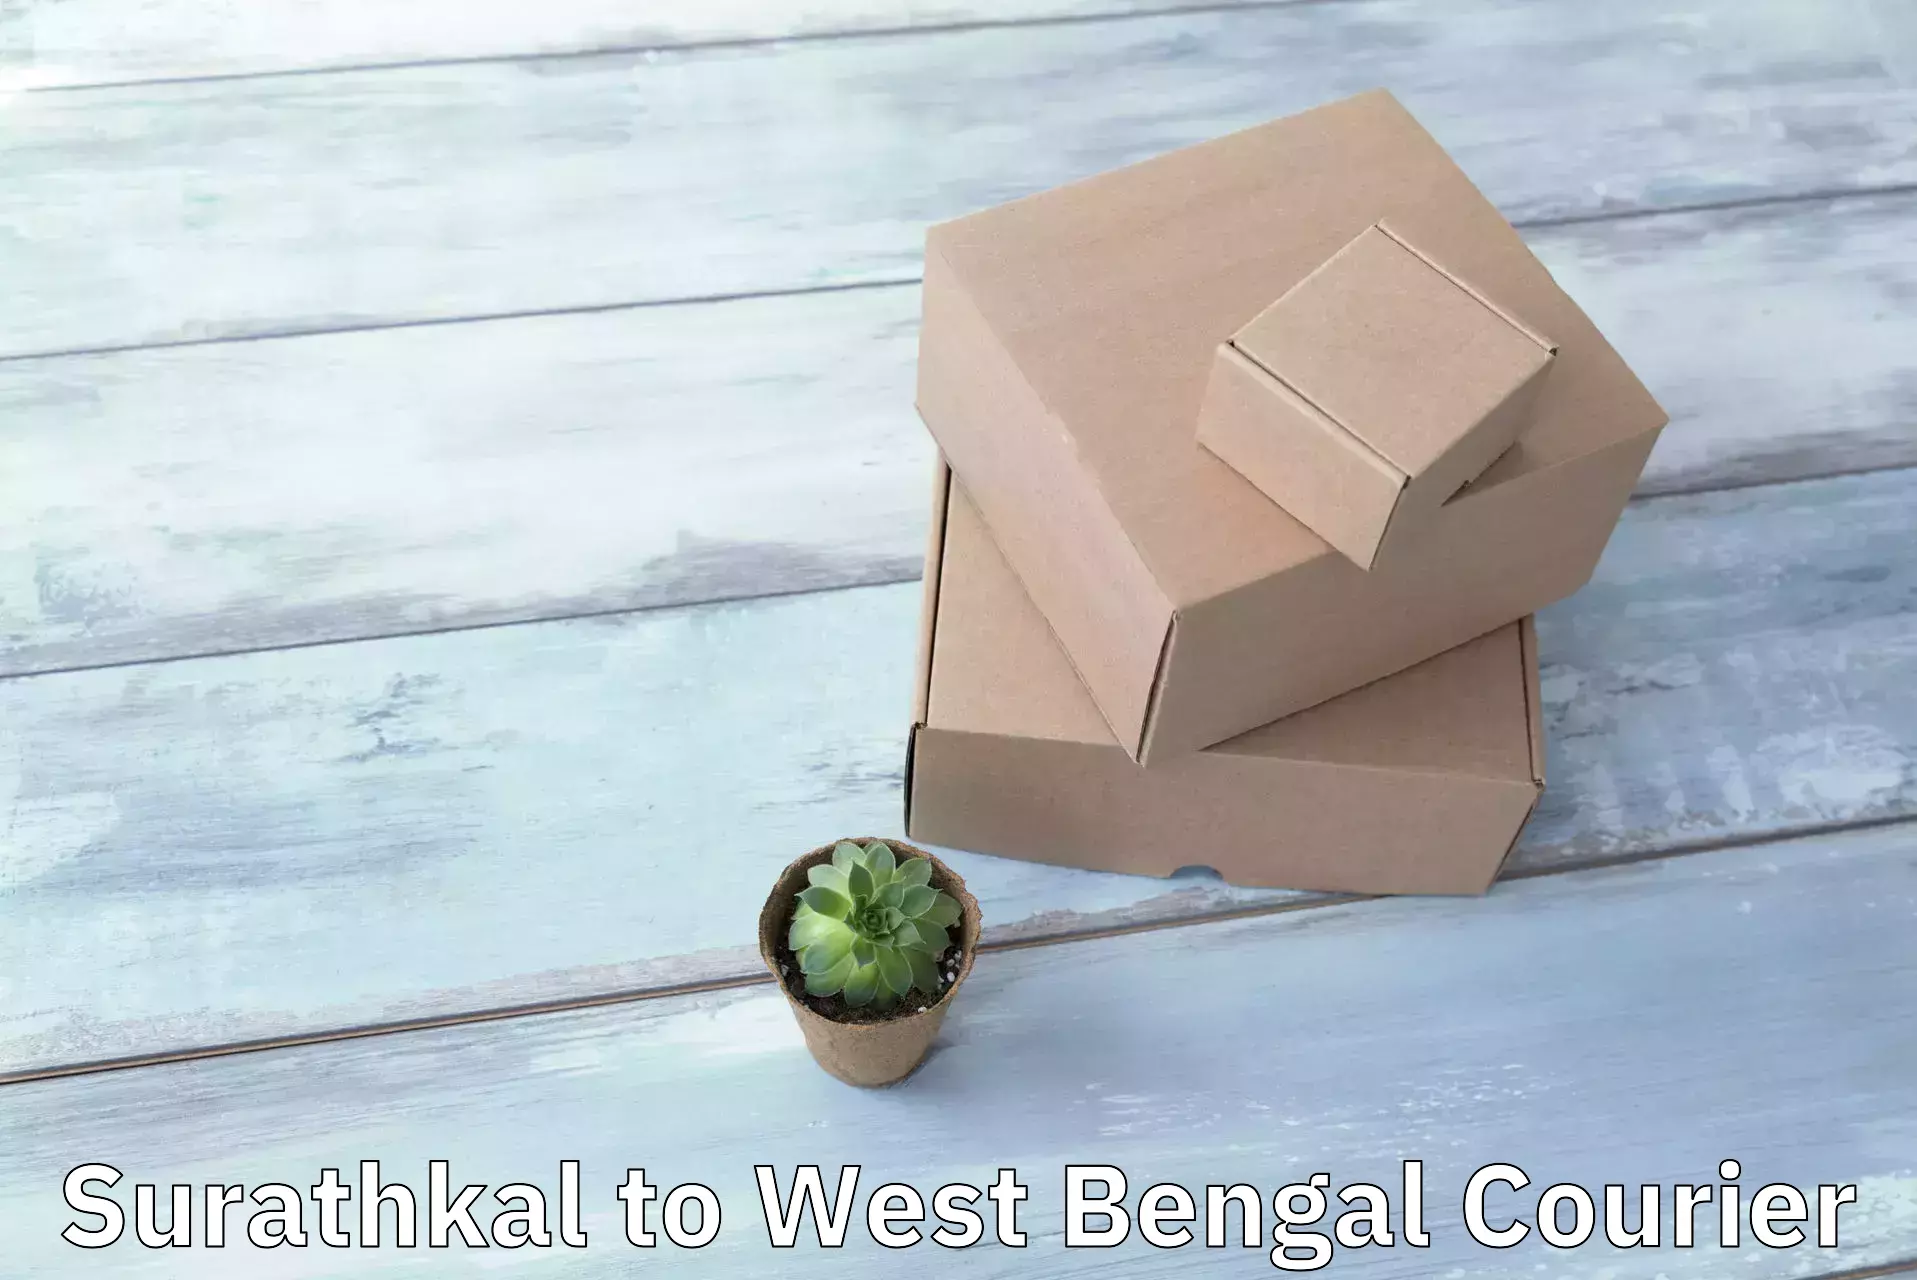 Professional courier handling Surathkal to Kolkata Port